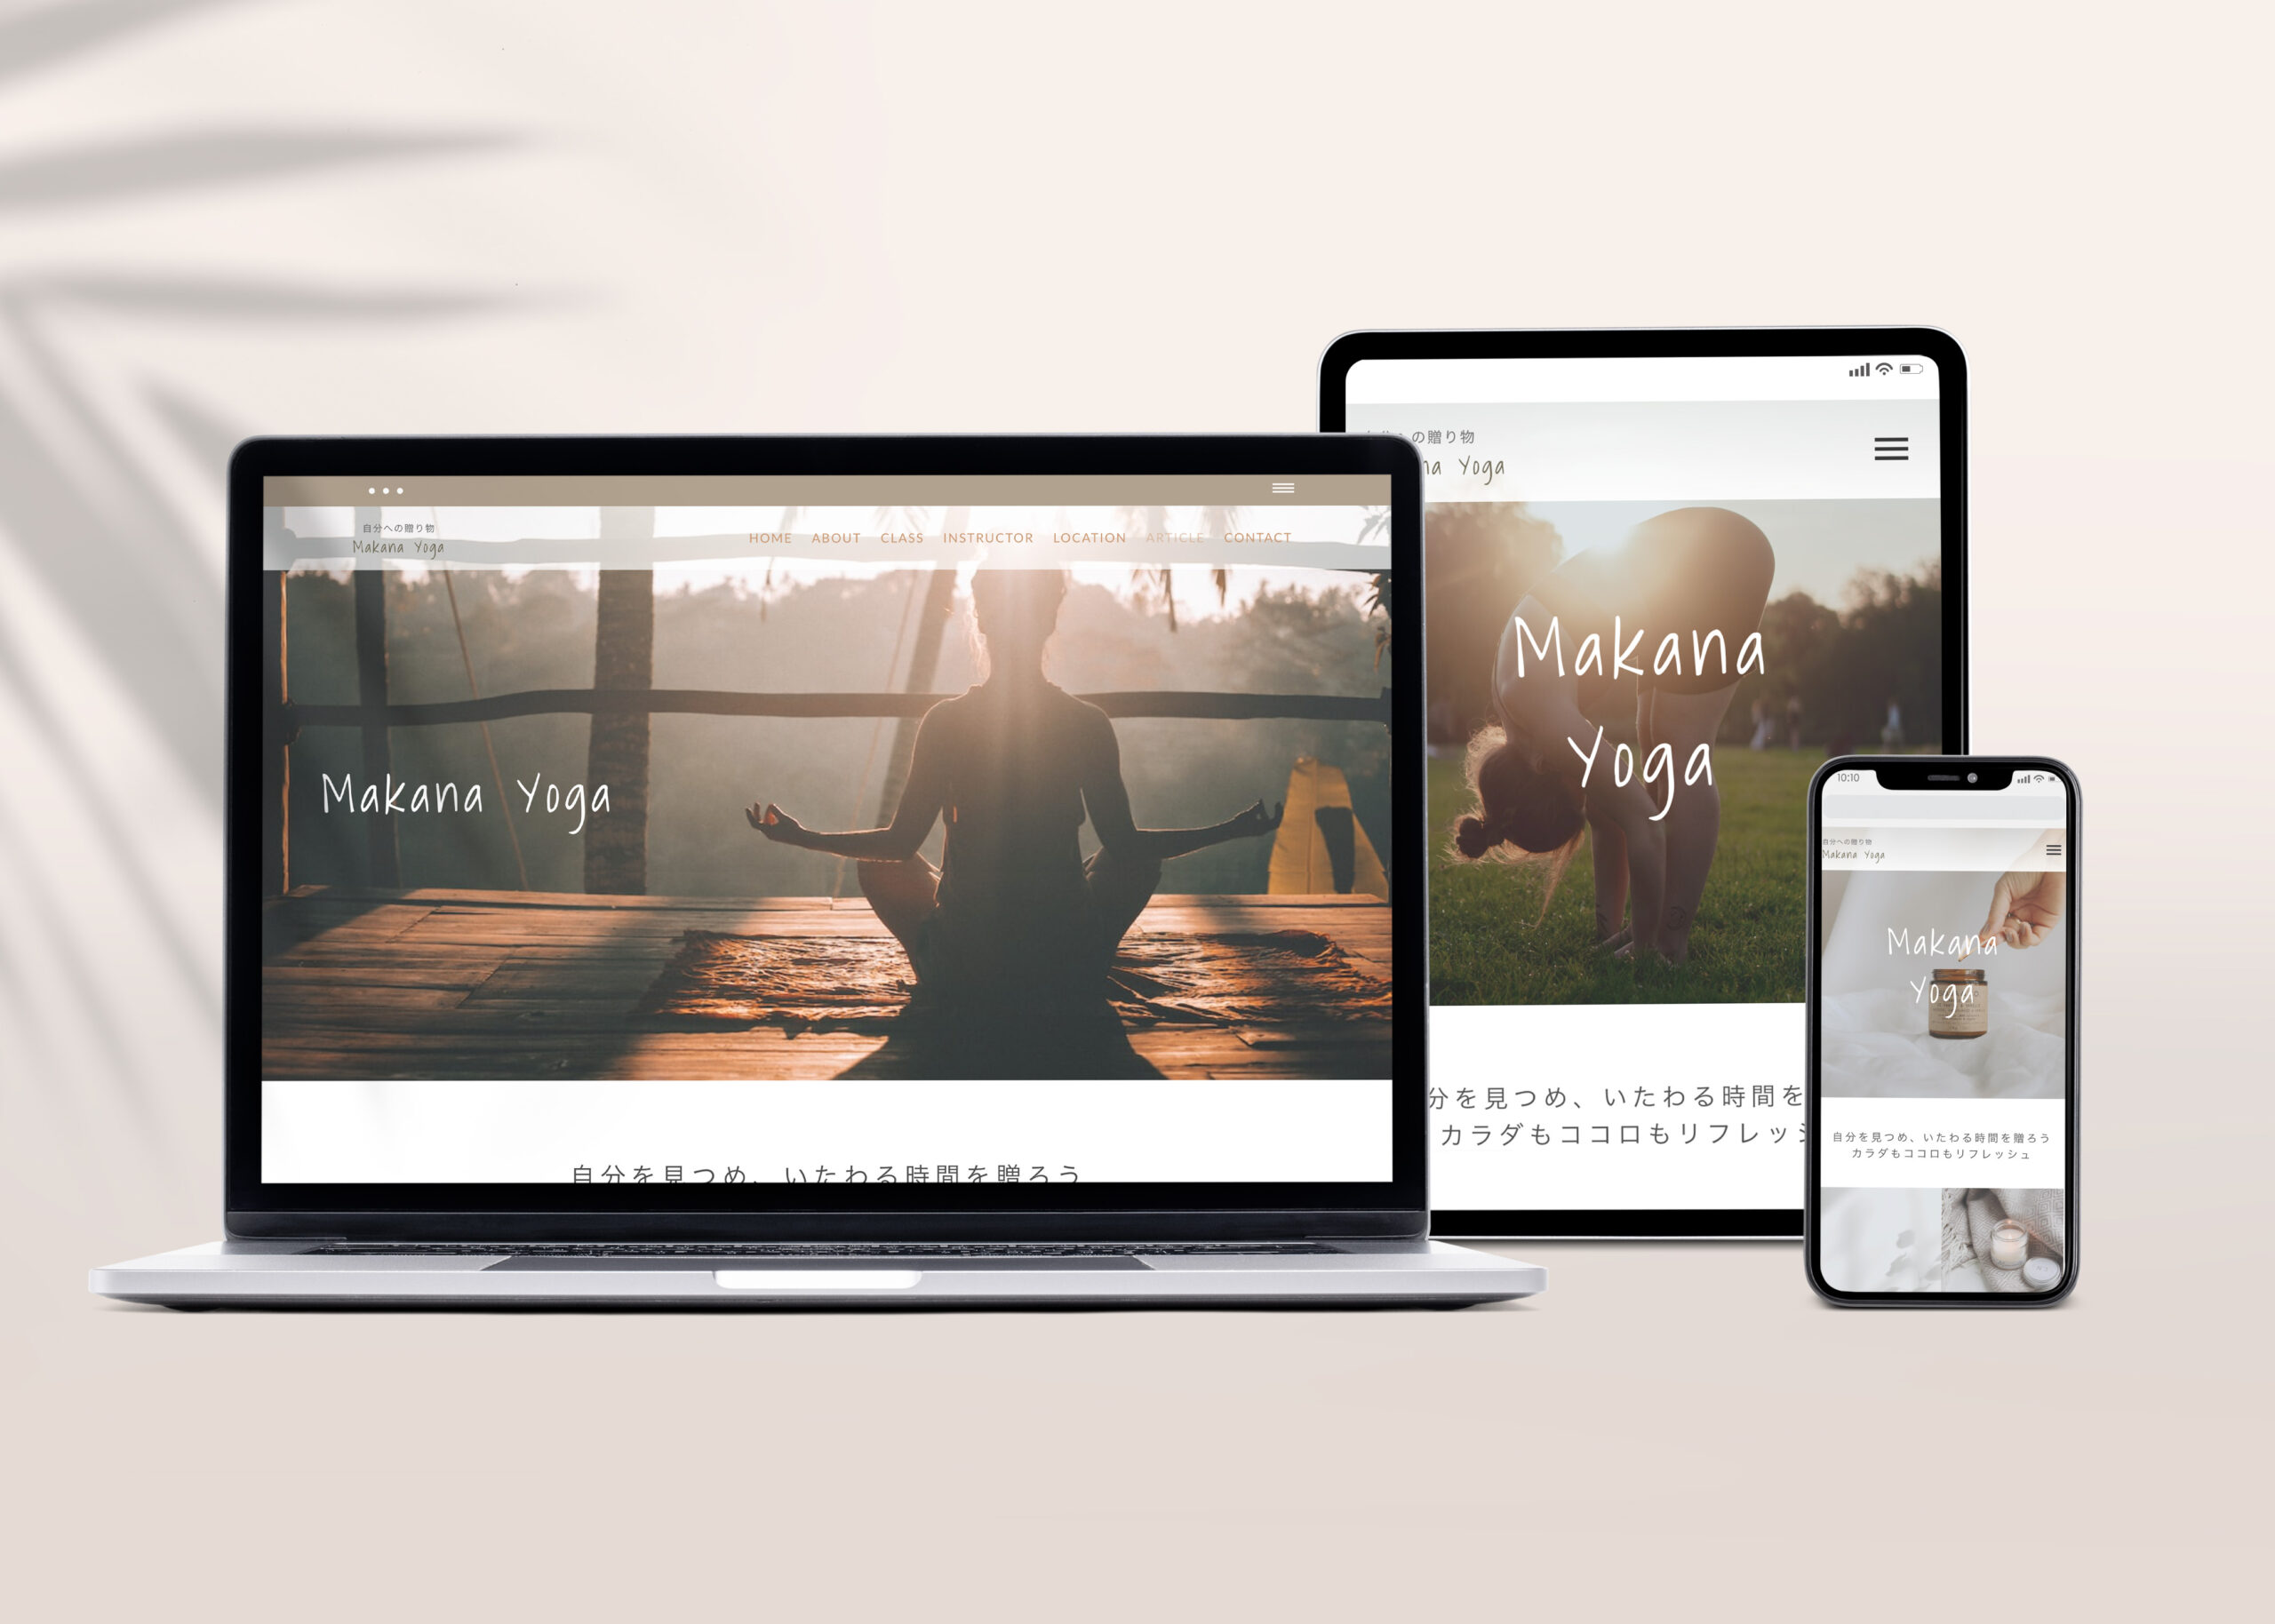 Makana Yoga web site